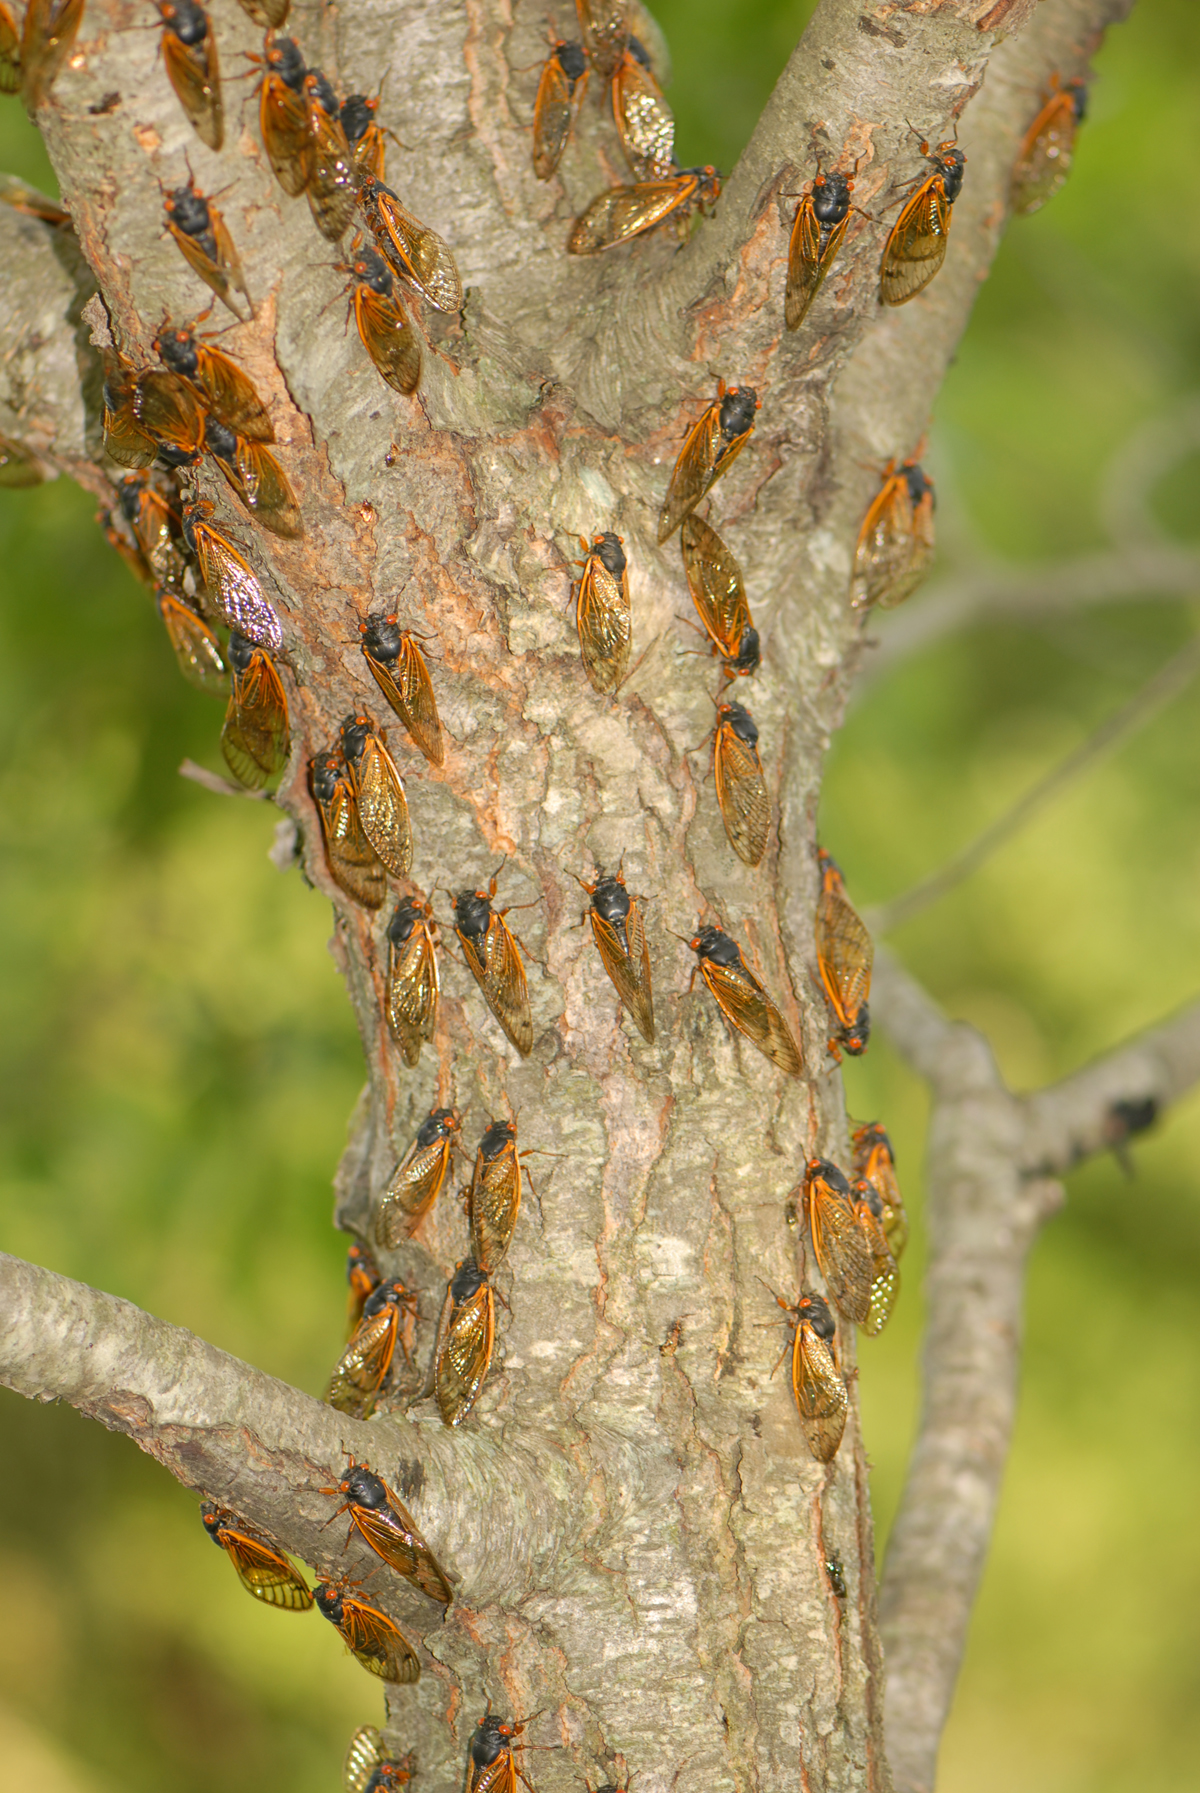 Many cicadas